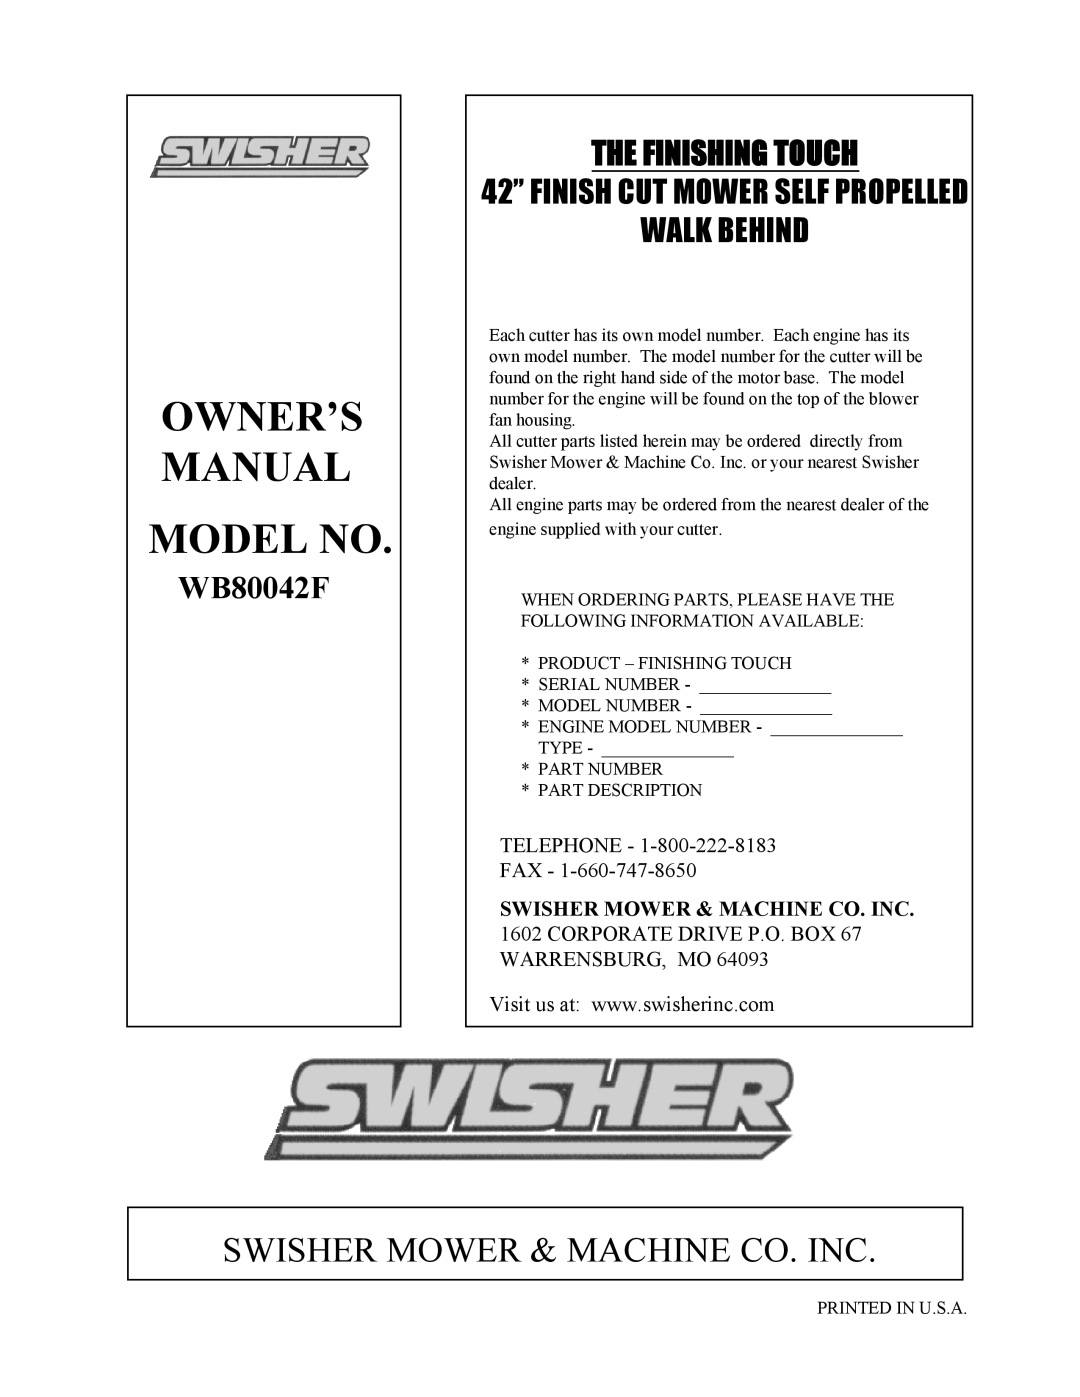 Swisher WB800-42F owner manual Telephone - Fax, Swisher Mower & Machine Co. Inc, WB80042F, The Finishing Touch 